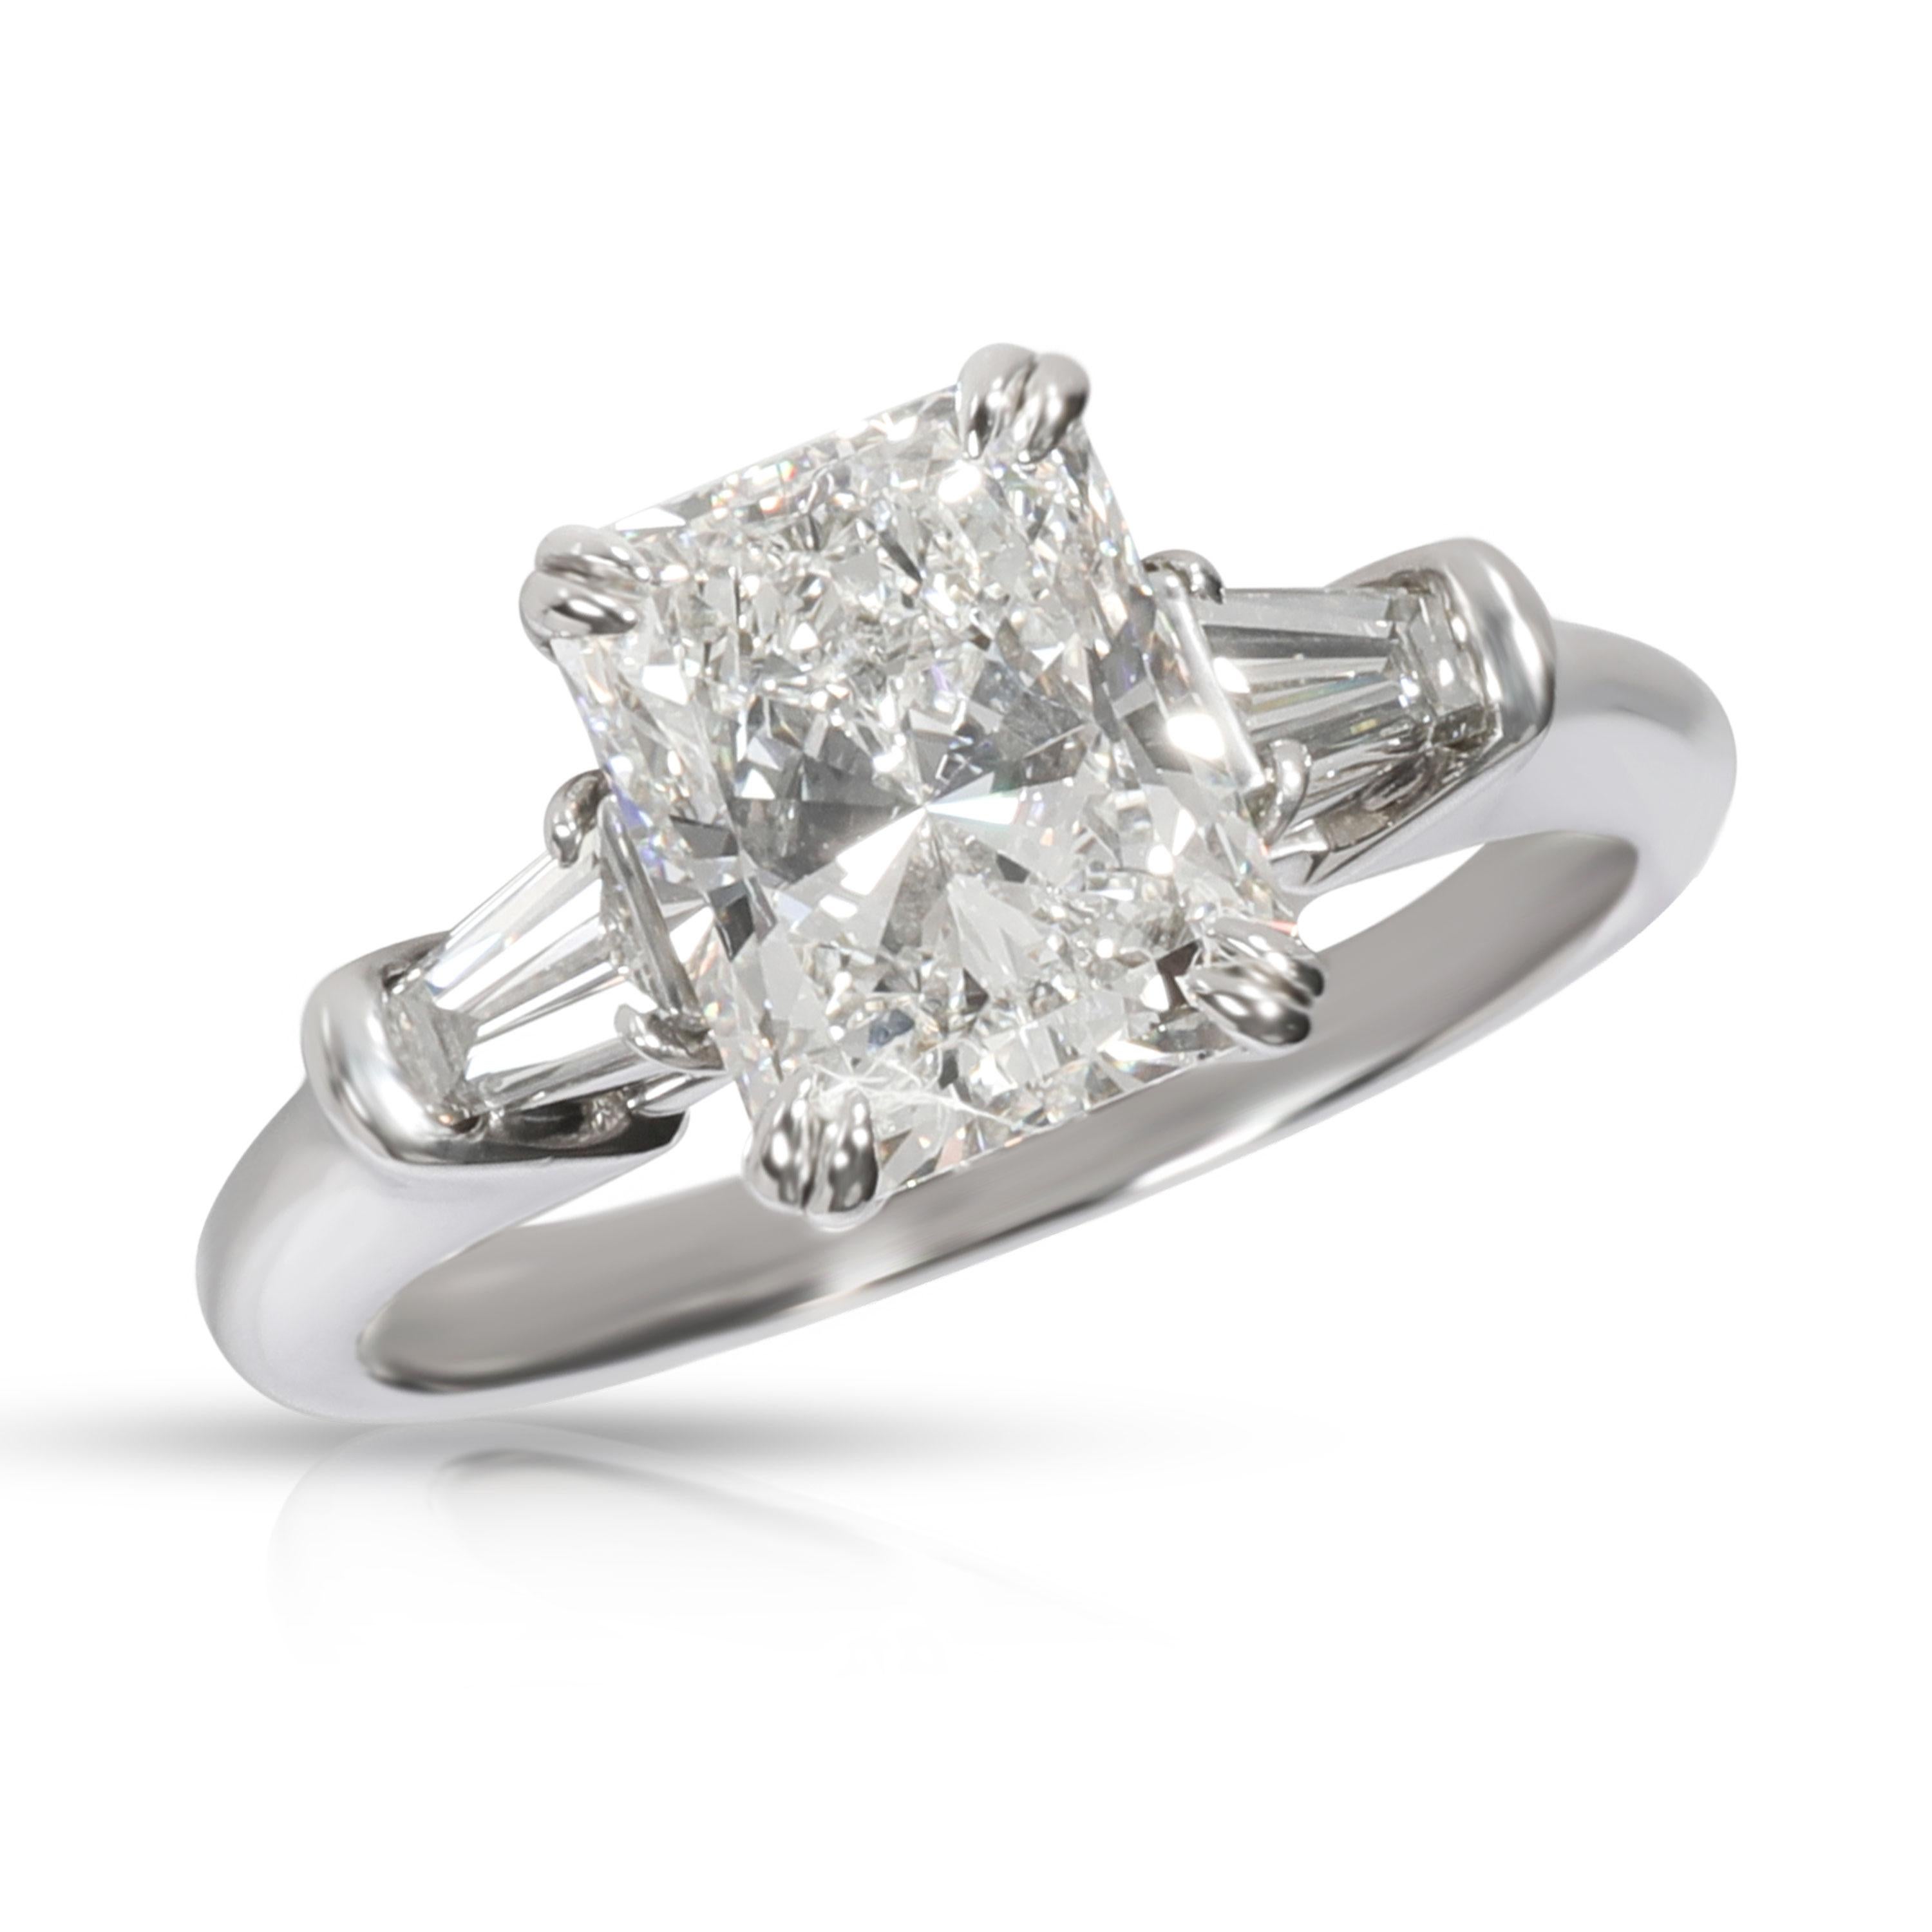 Cushion Cut Harry Winston Radiant Diamond Engagement Ring in Platinum GIA F VVS1 2.41 Carat